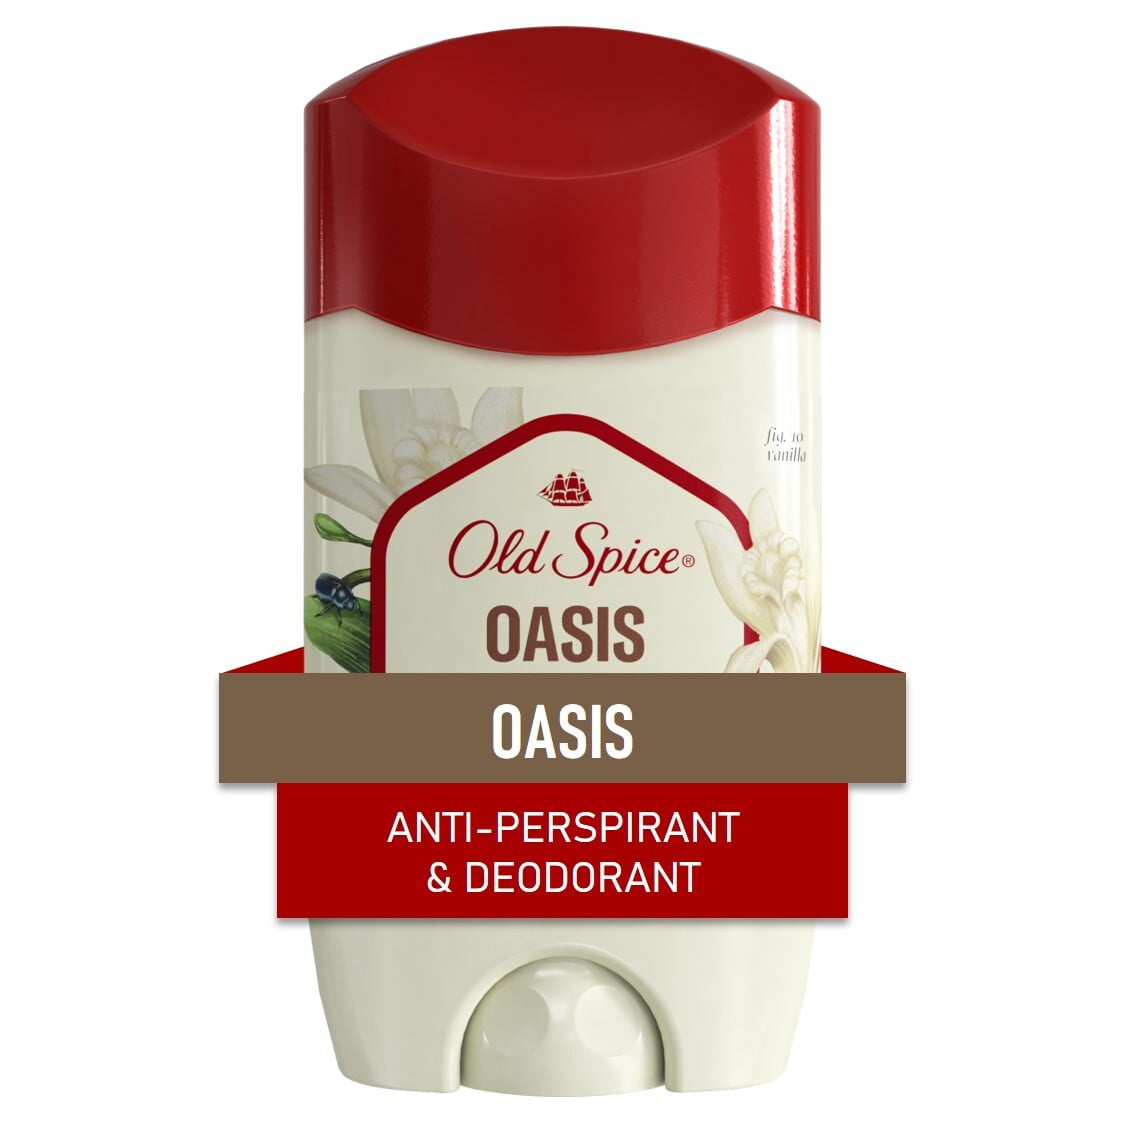 Old Spice Antiperspirant Deodorant for Men Oasis with Vanilla, 2.6 oz